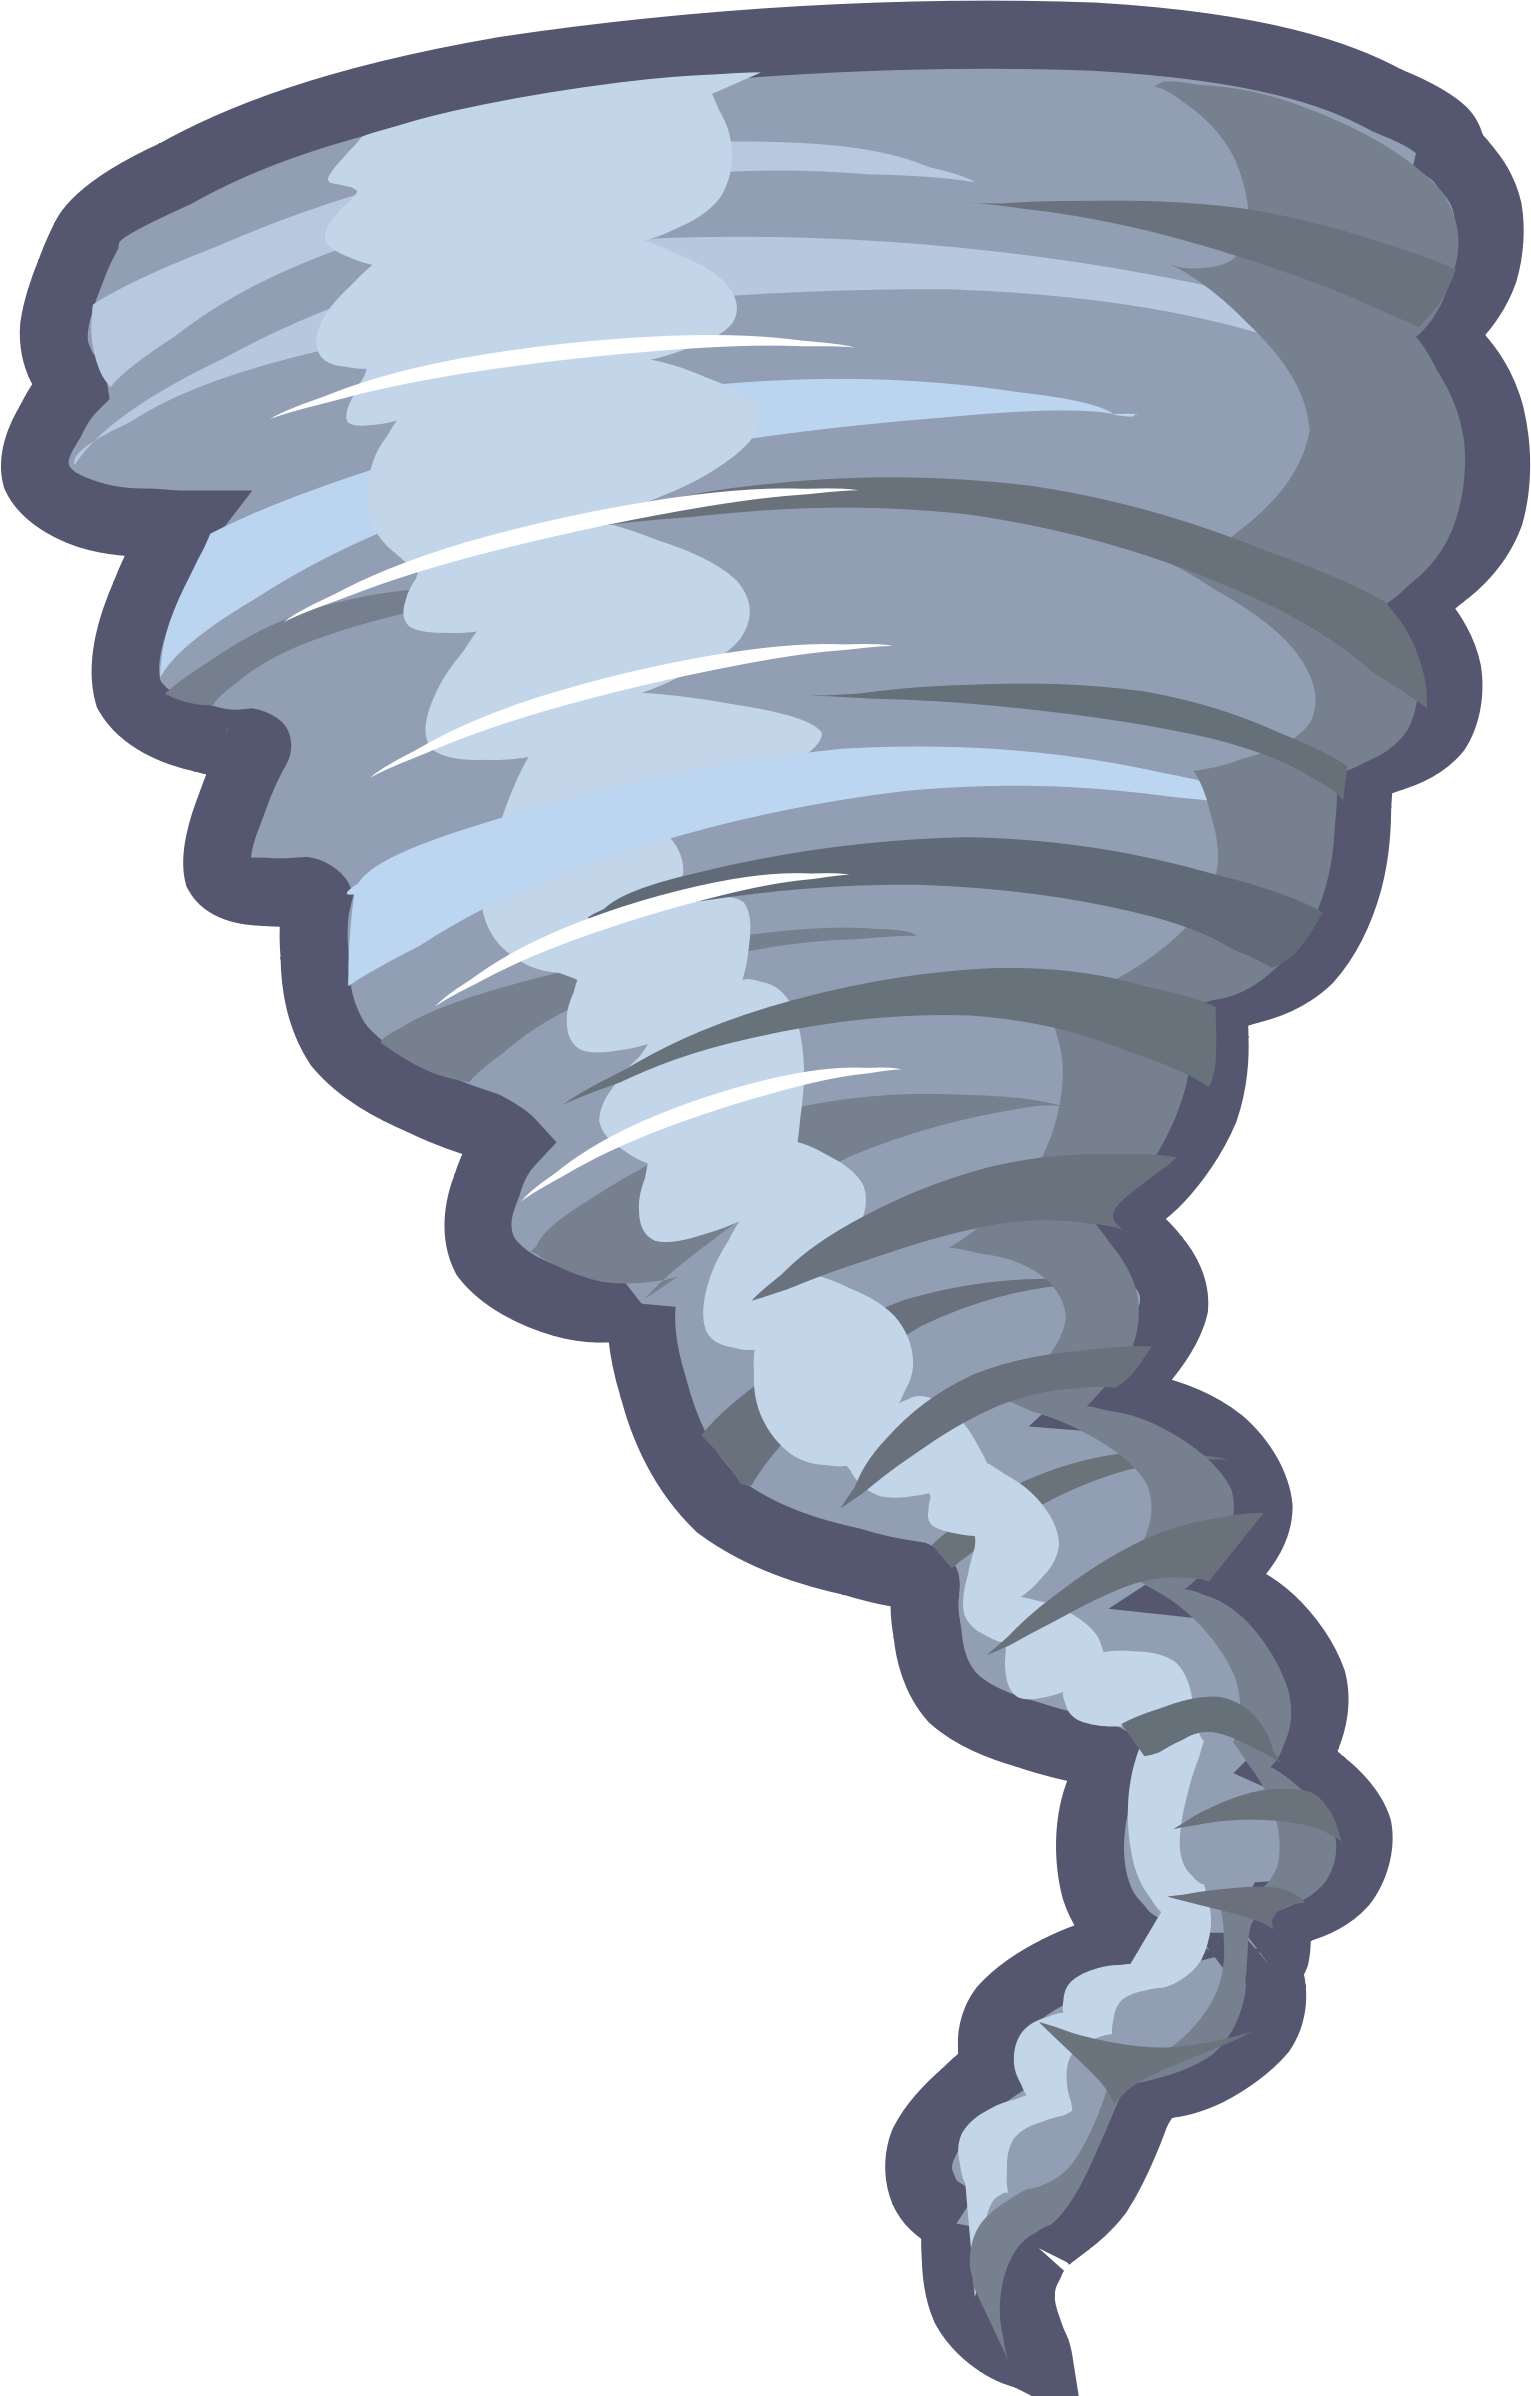 Tornado clip art at vector 2 image